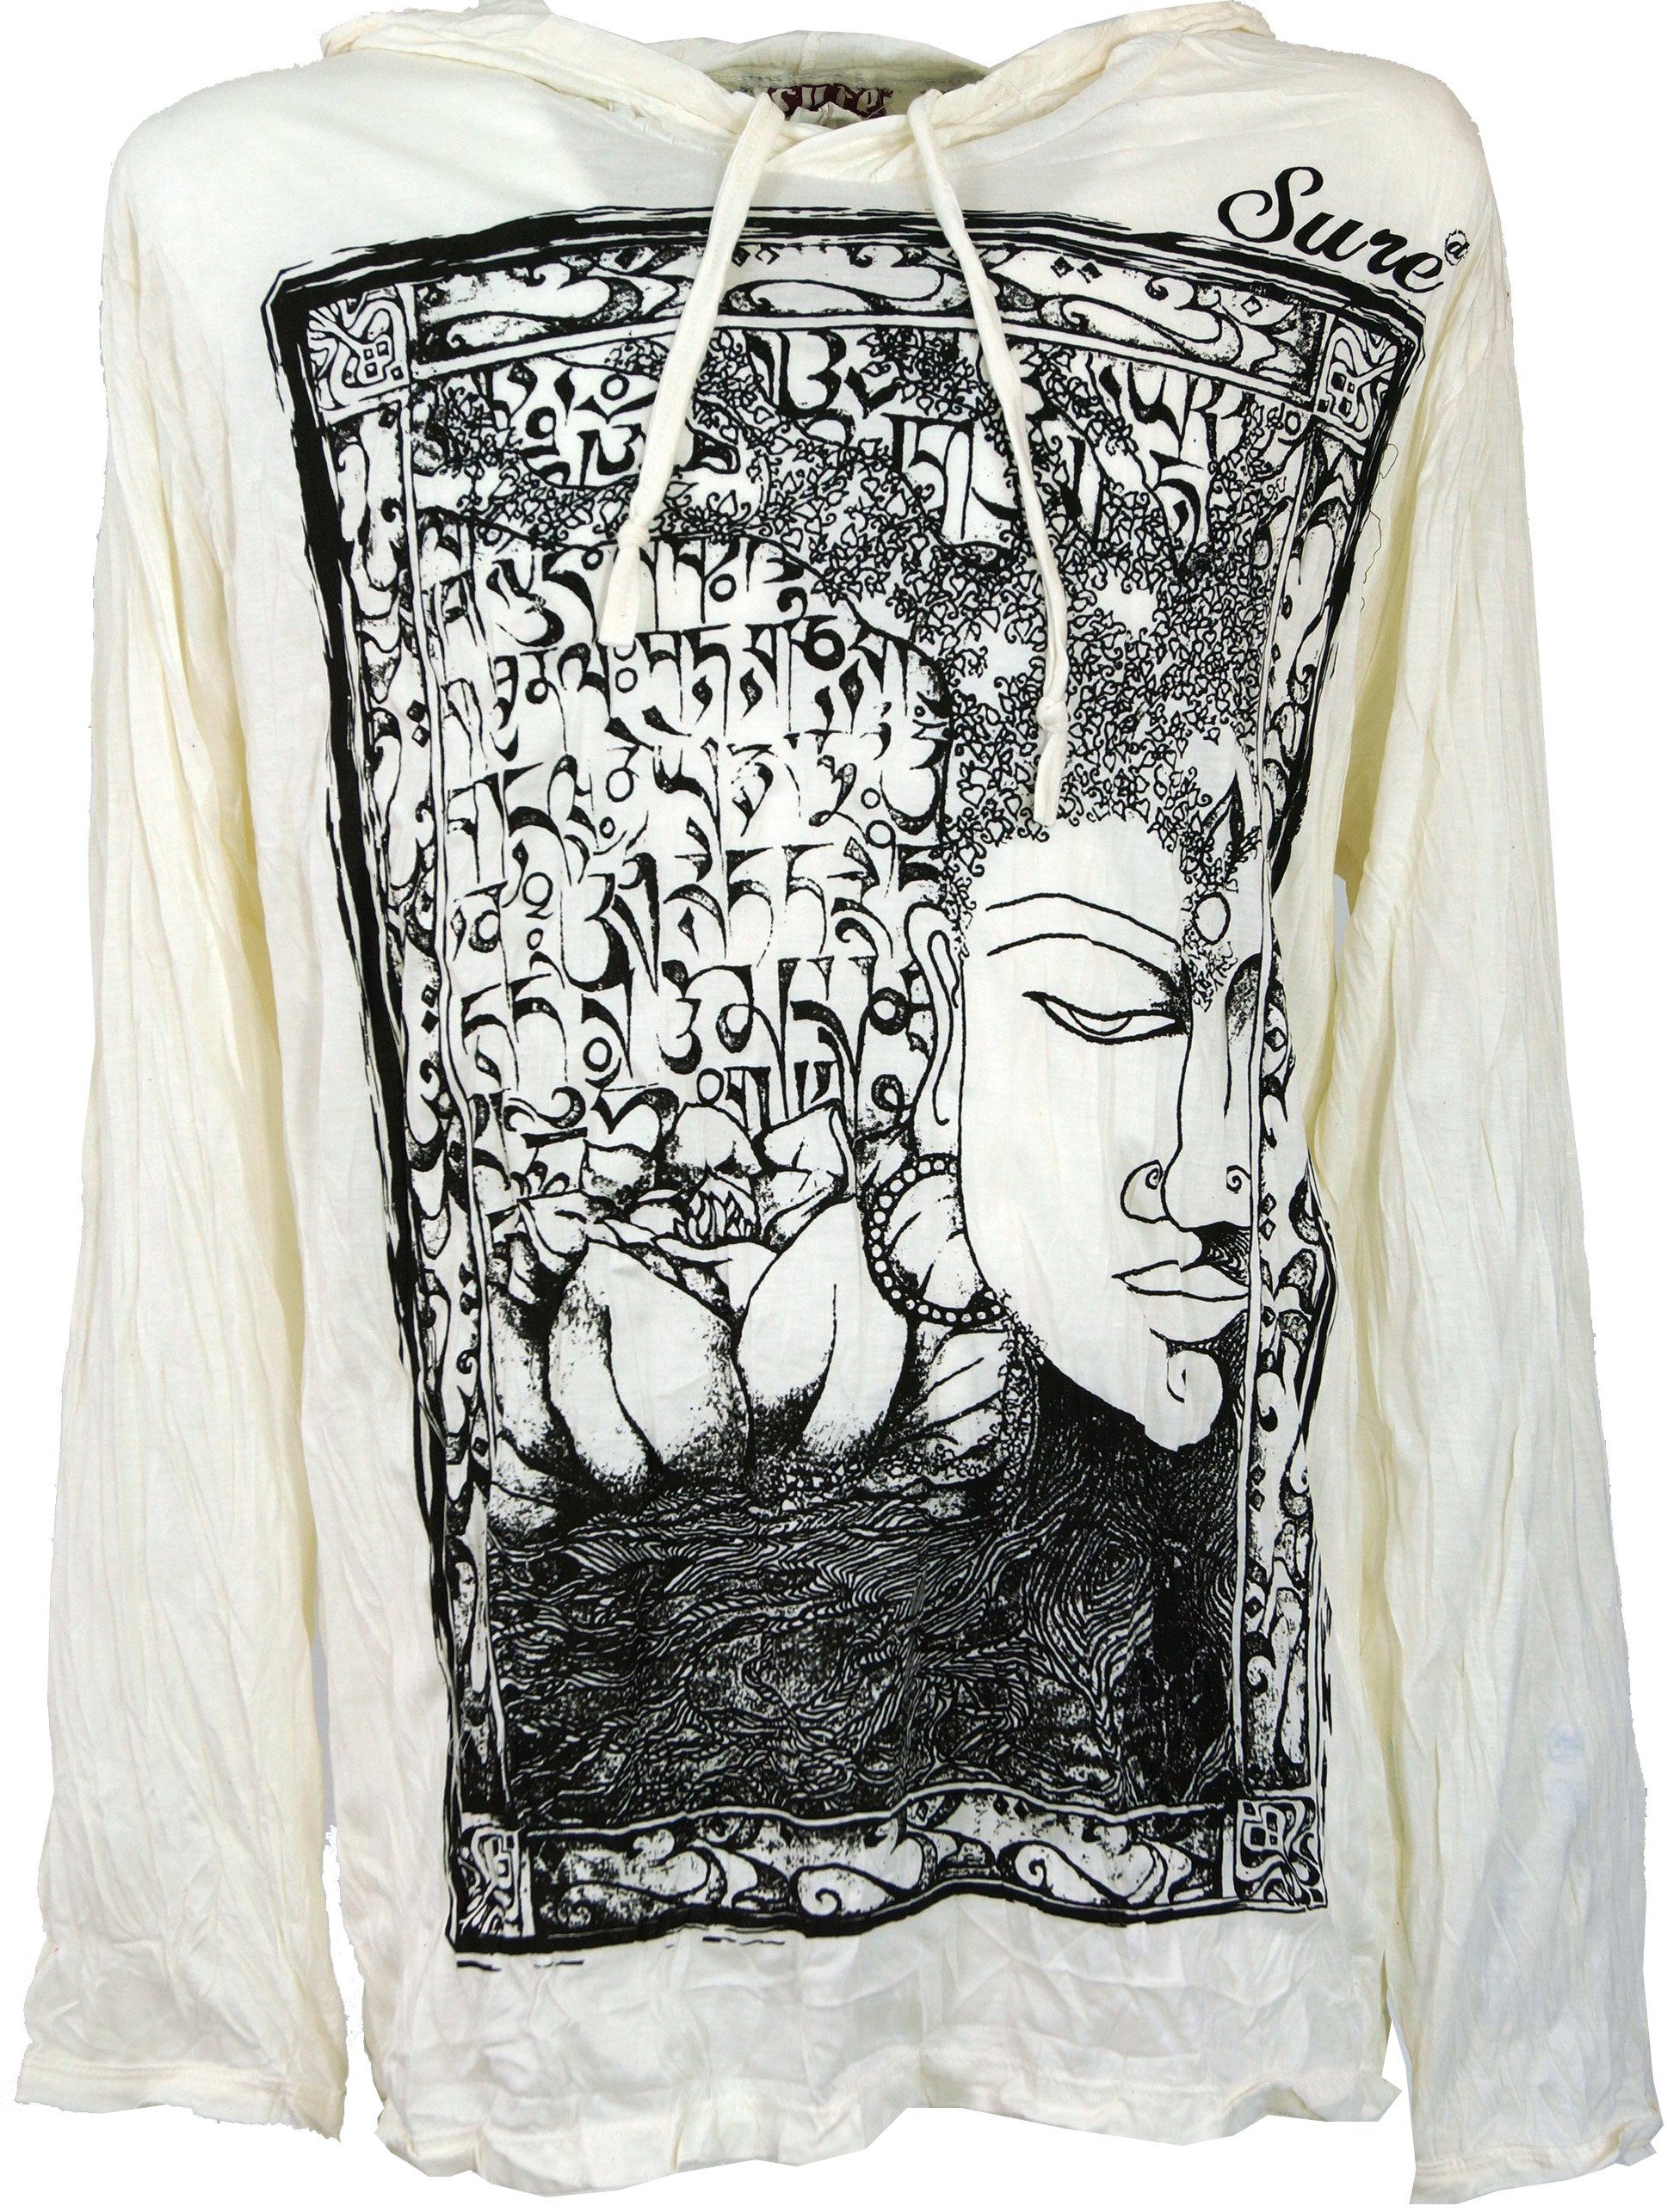 Kapuzenshirt Buddha Style, Guru-Shop T-Shirt Goa Mantra Bekleidung weiß Festival, Sure -.. alternative Langarmshirt,